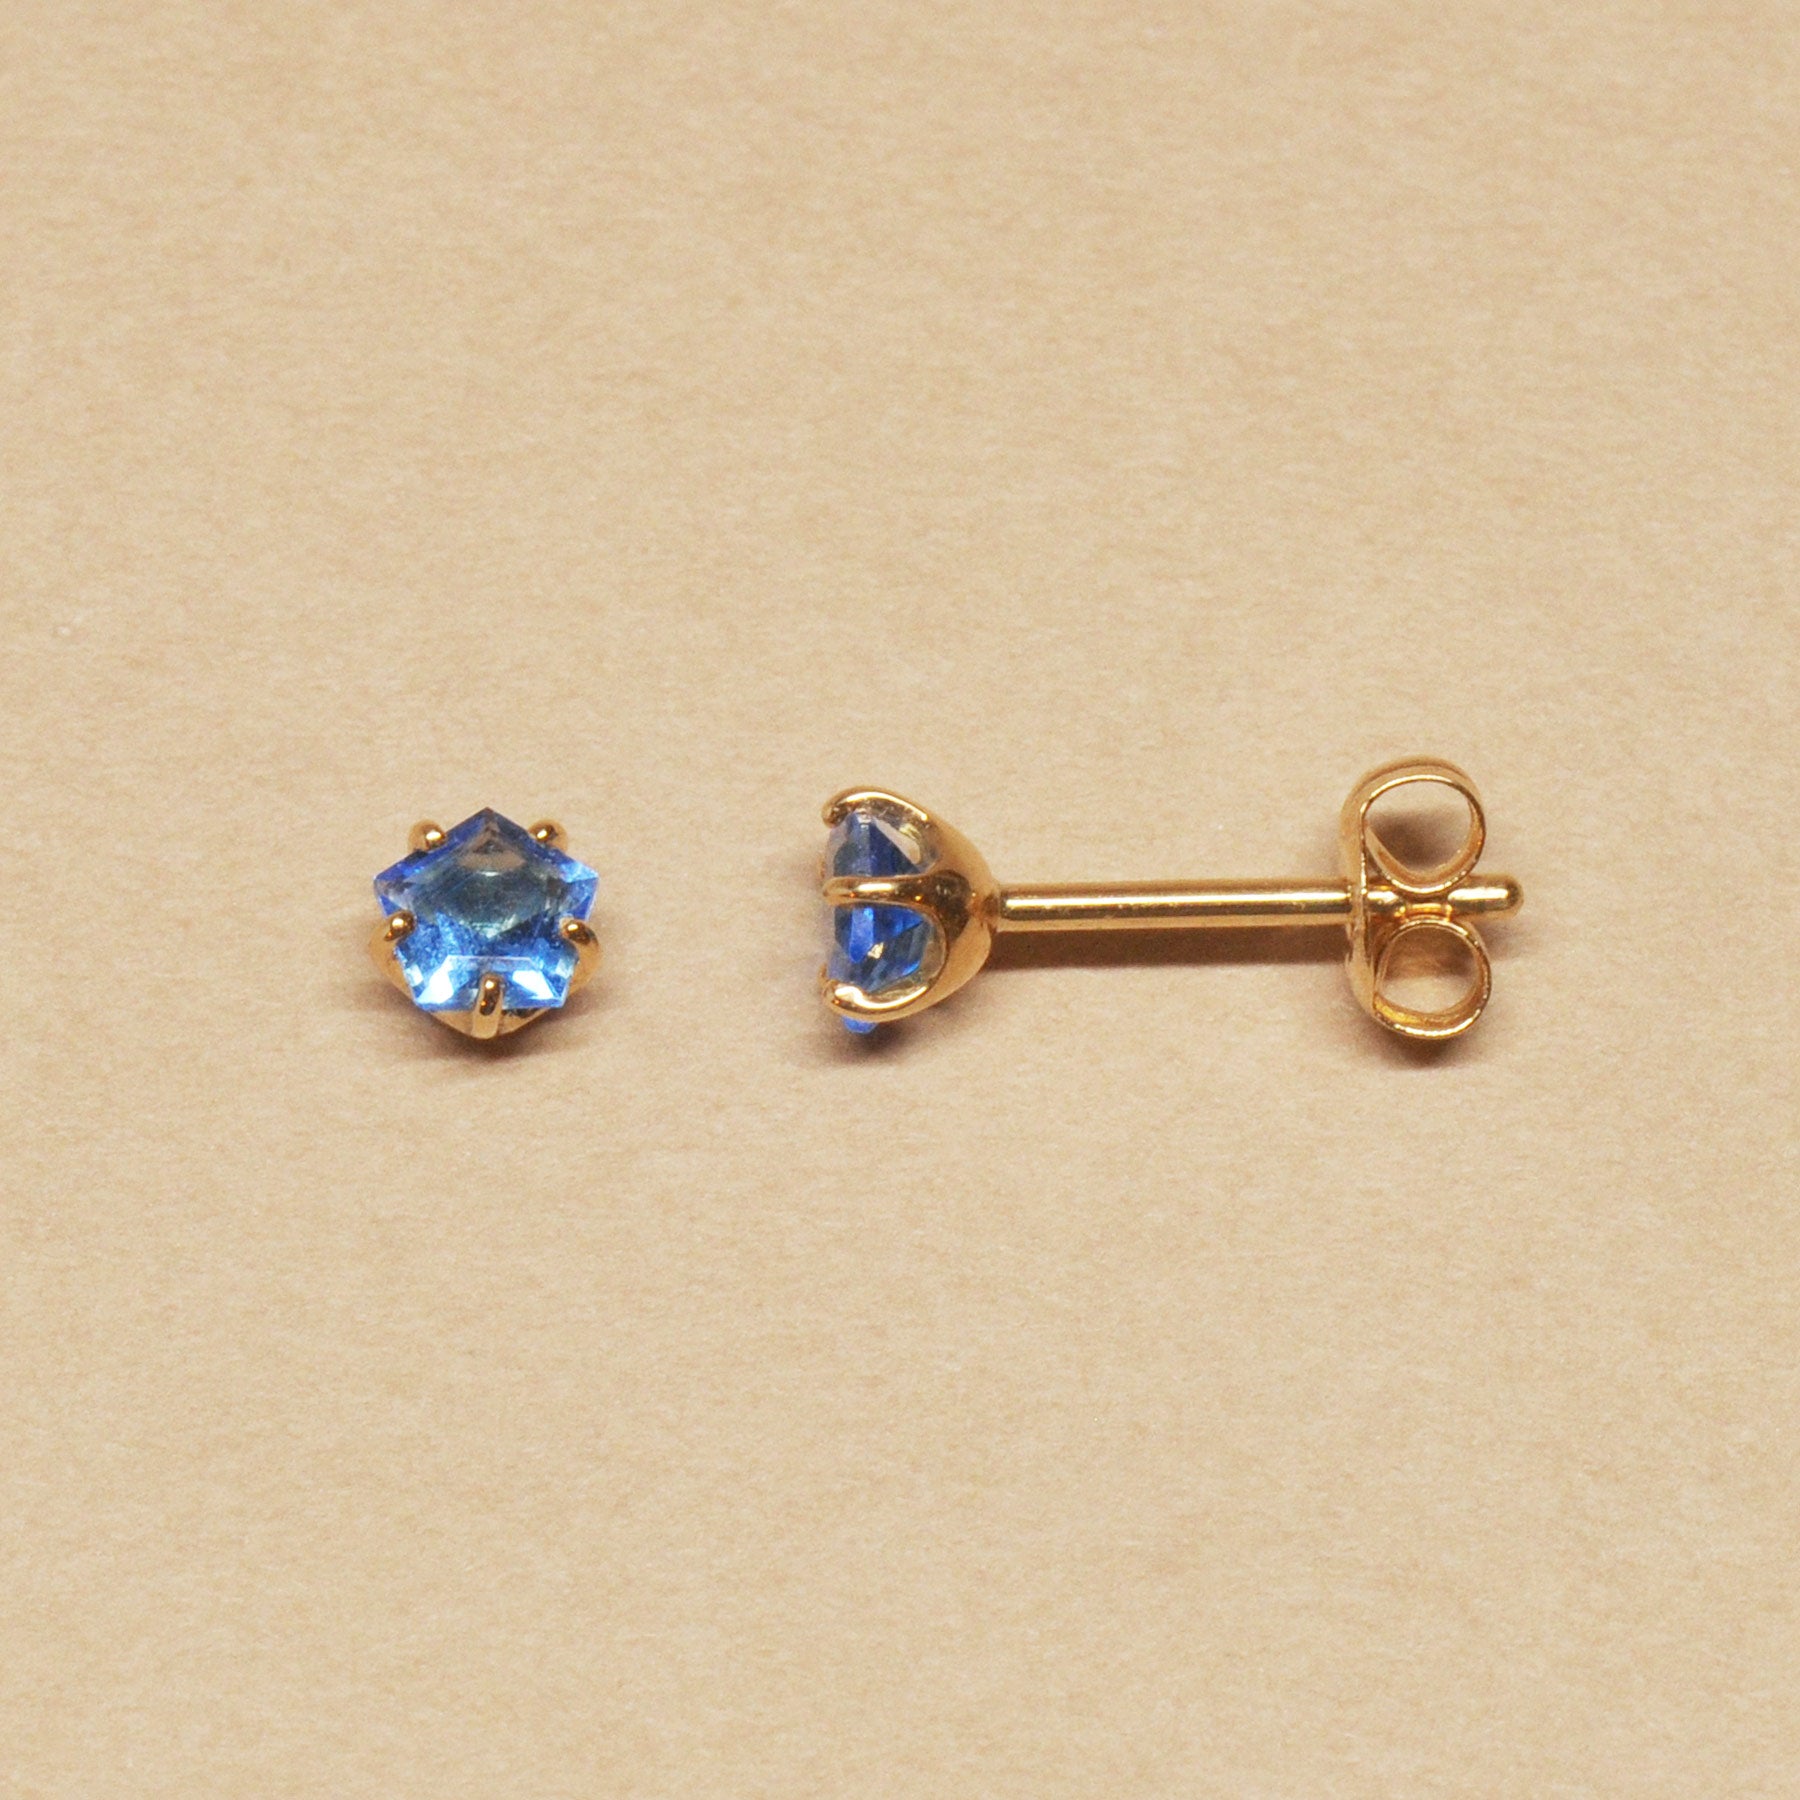 [Second Earrings] 18K Yellow Gold Blue Quartz Pentagon Cut Earrings - Product Image